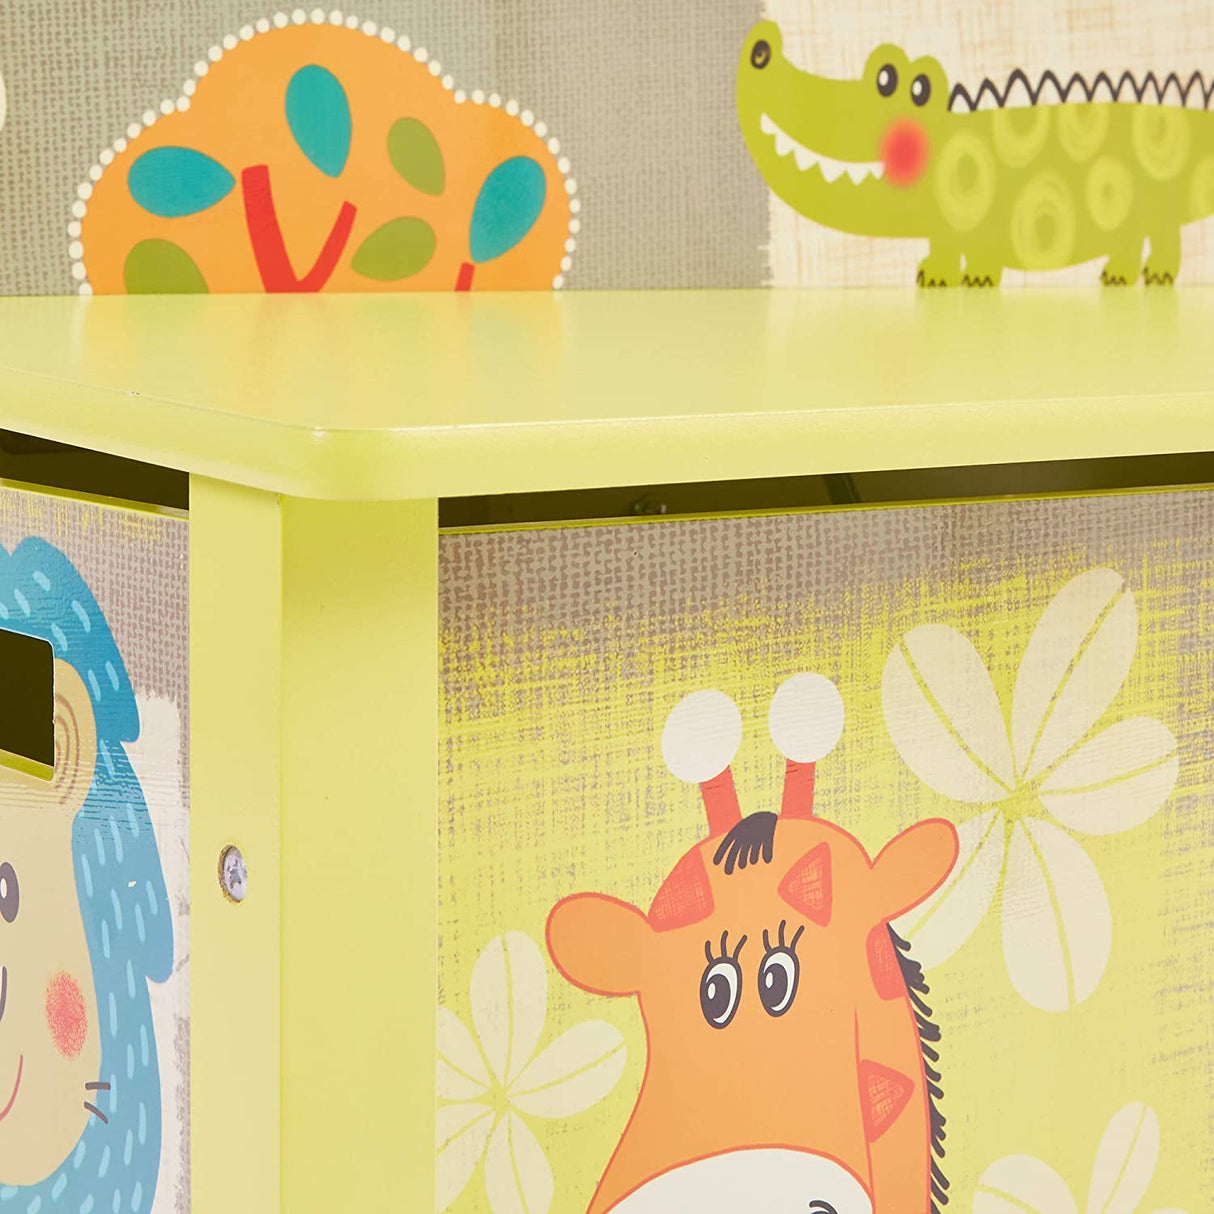 Kid Safari Toy Box - Liberty House Toys - Junior Bambinos